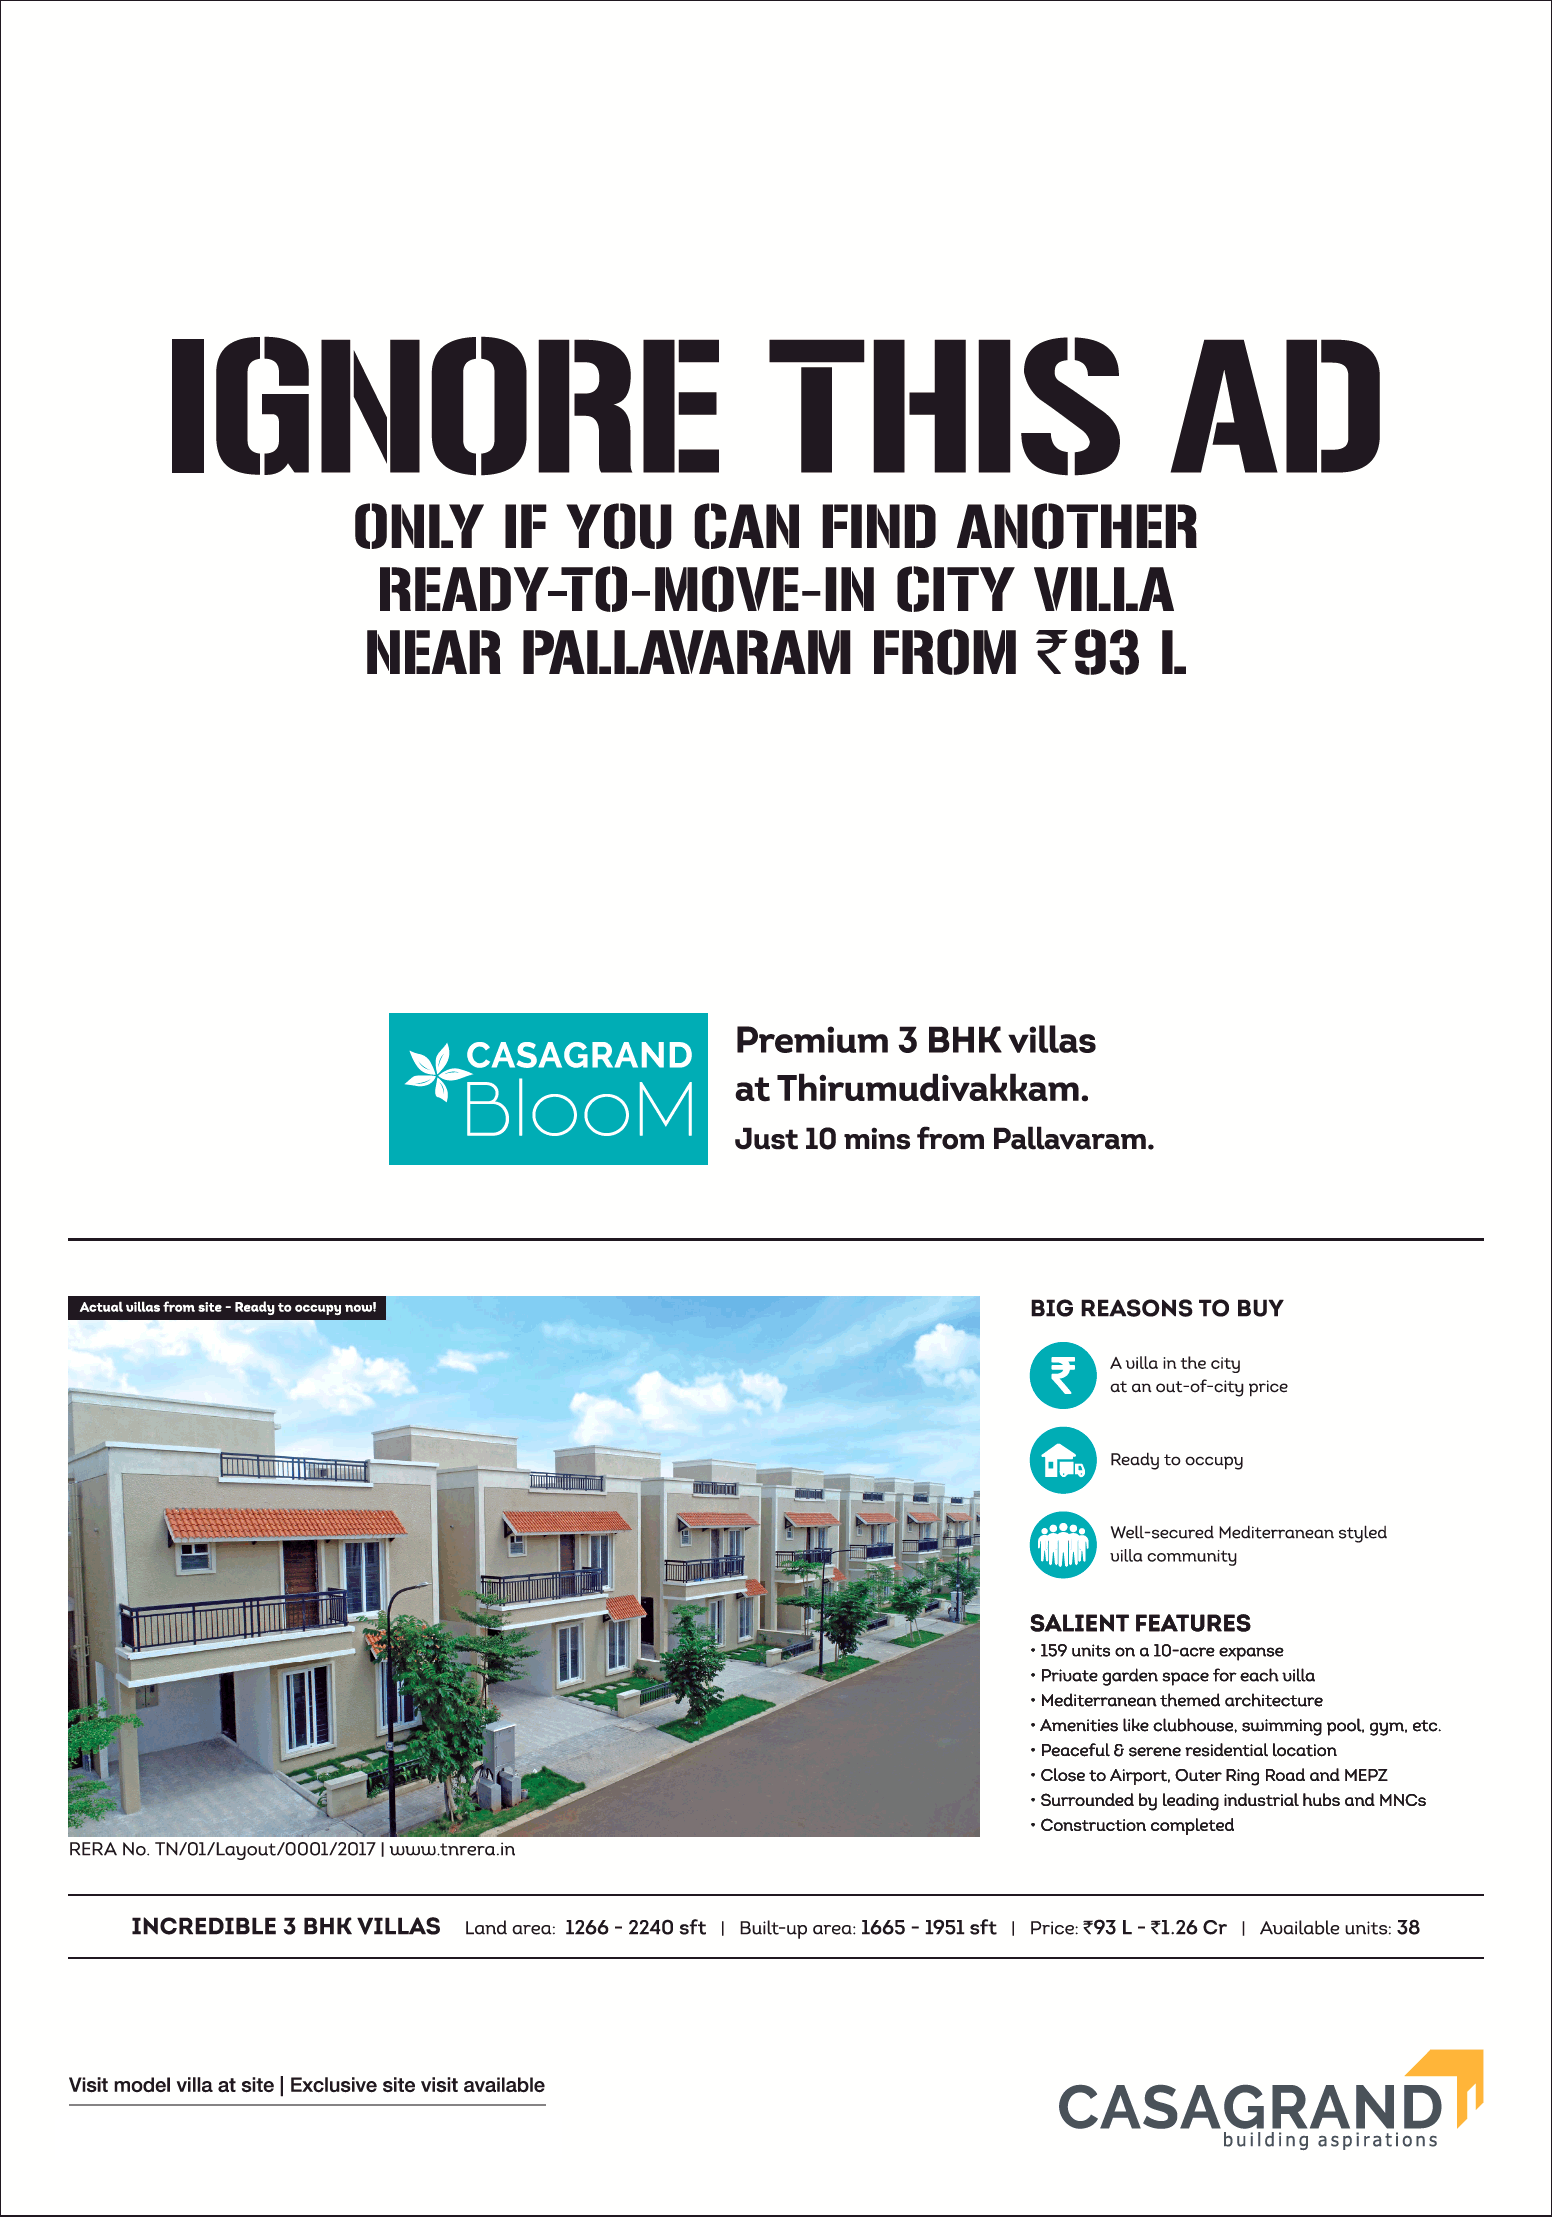 Premium 3 BHK villa at Casagrand Bloom, Chennai Update